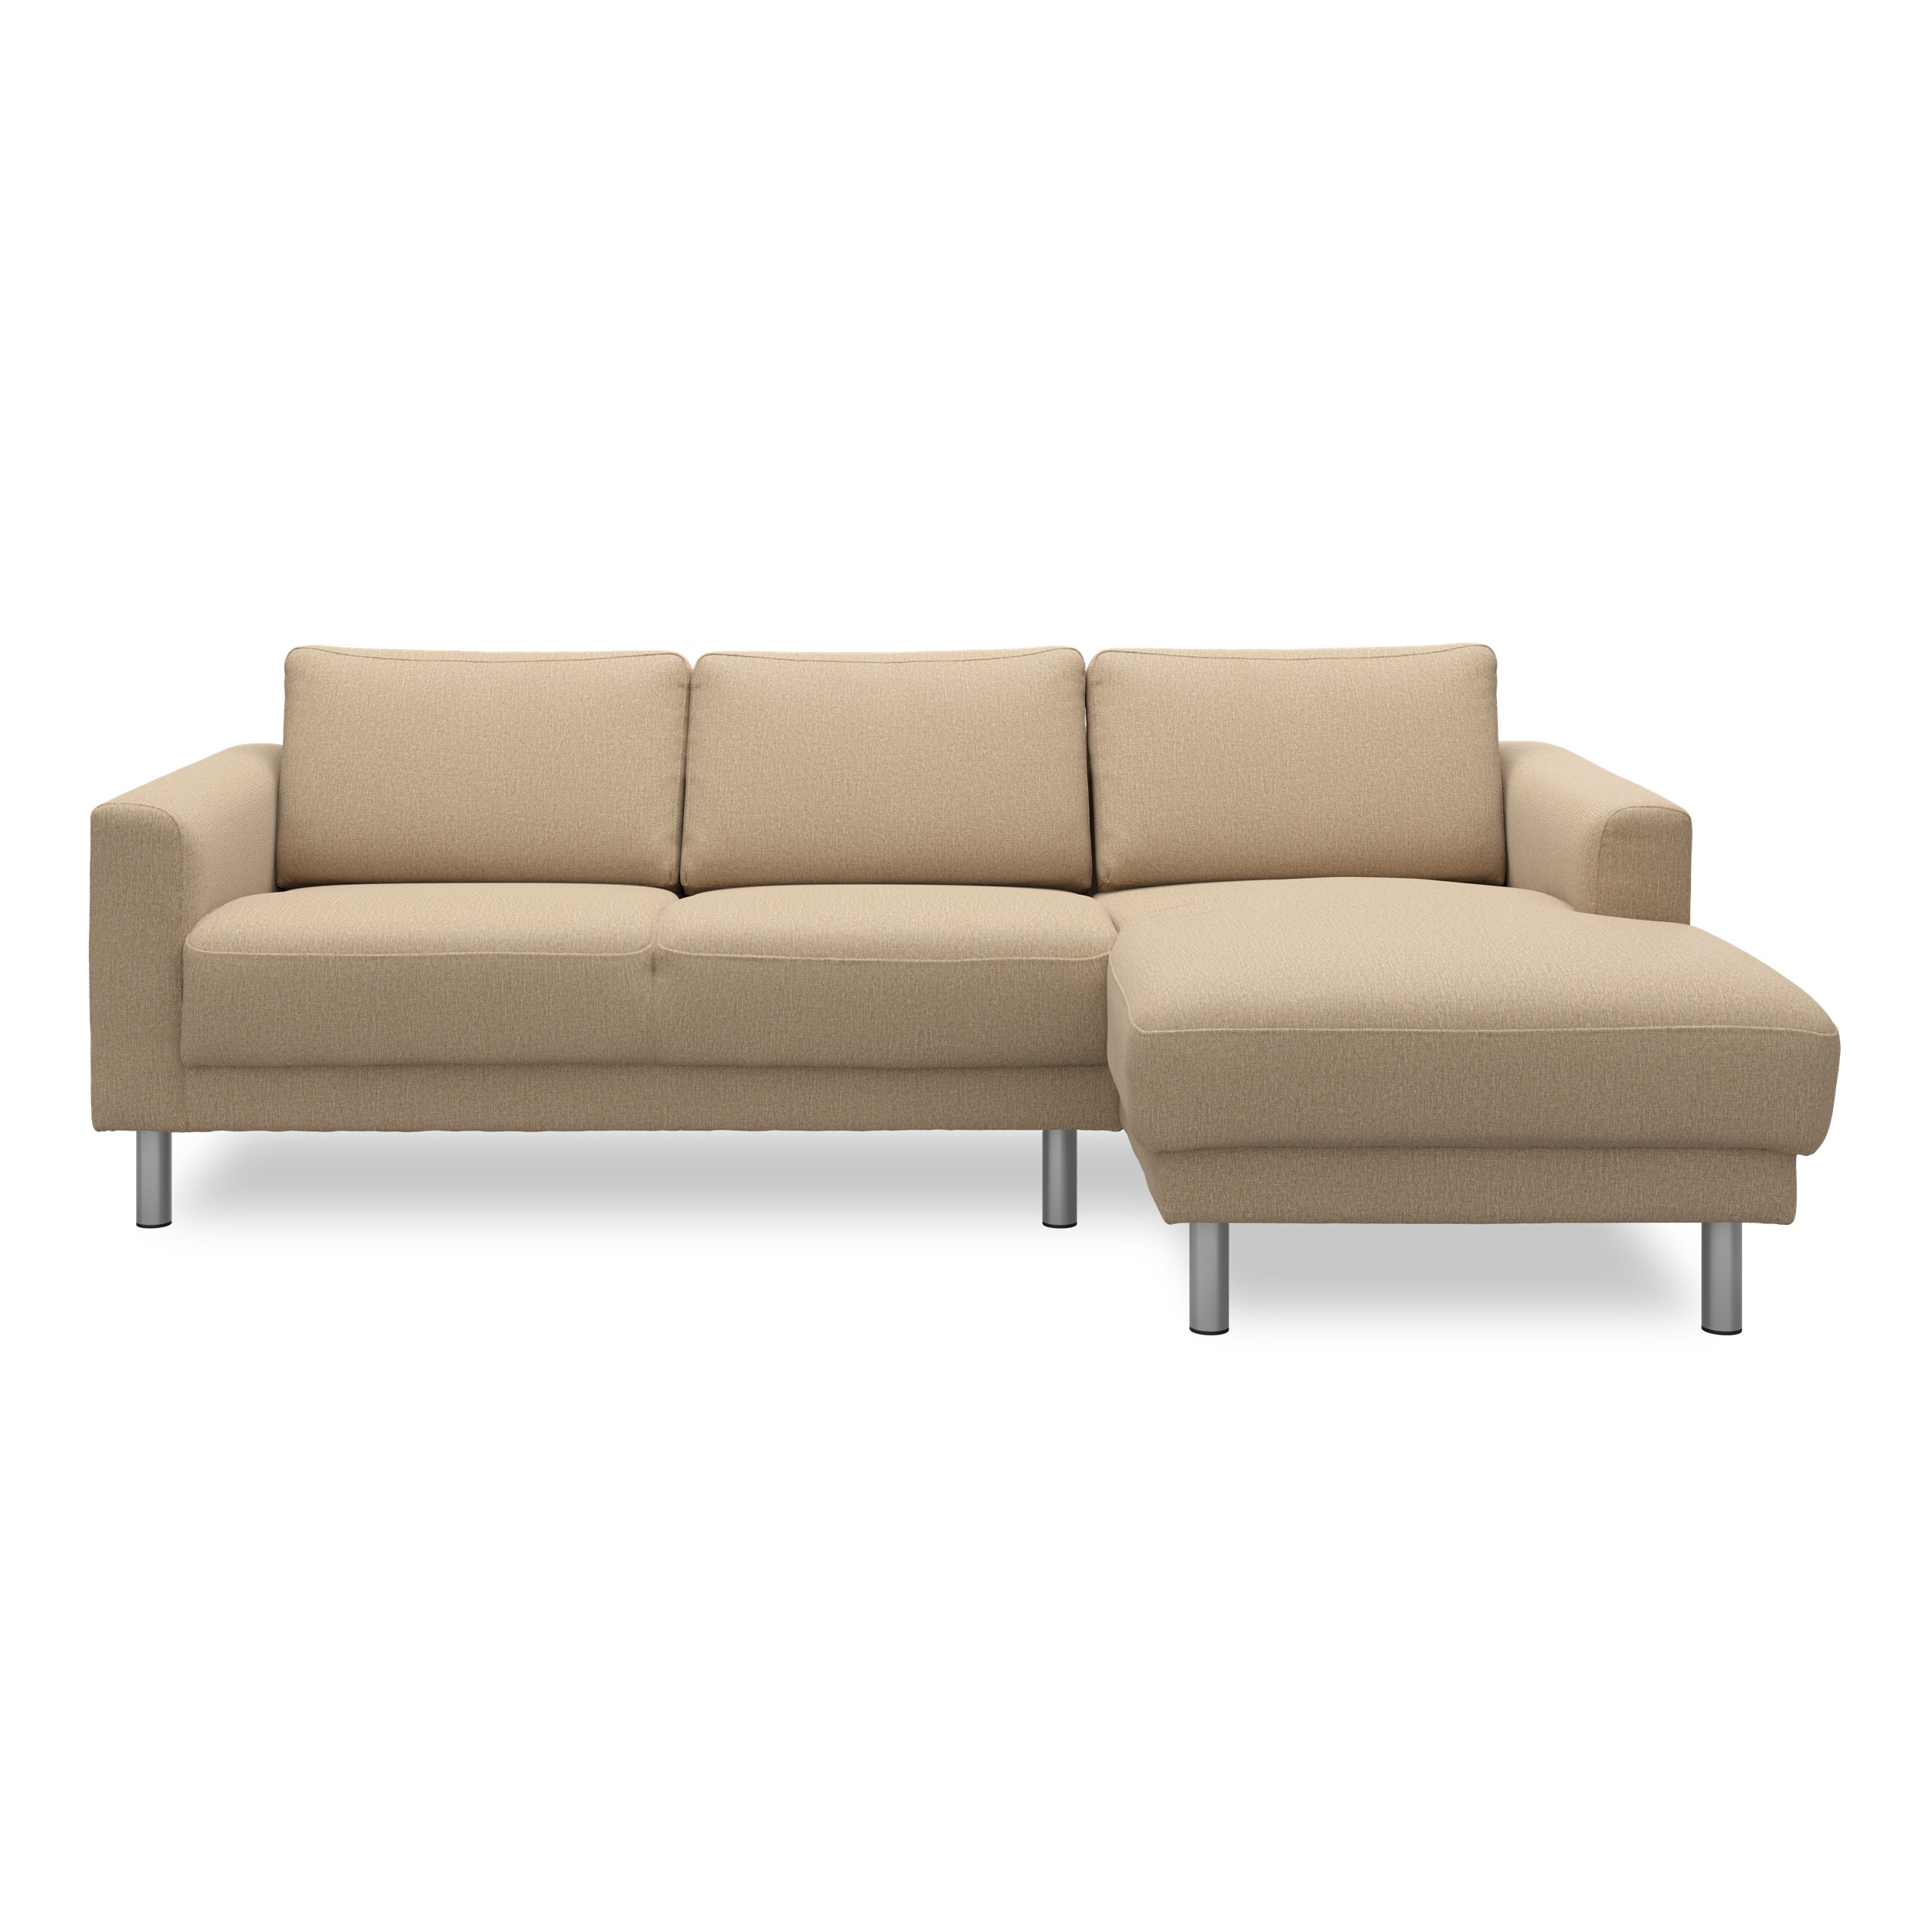 Cleveland højrevendt sofa med chaiselong 